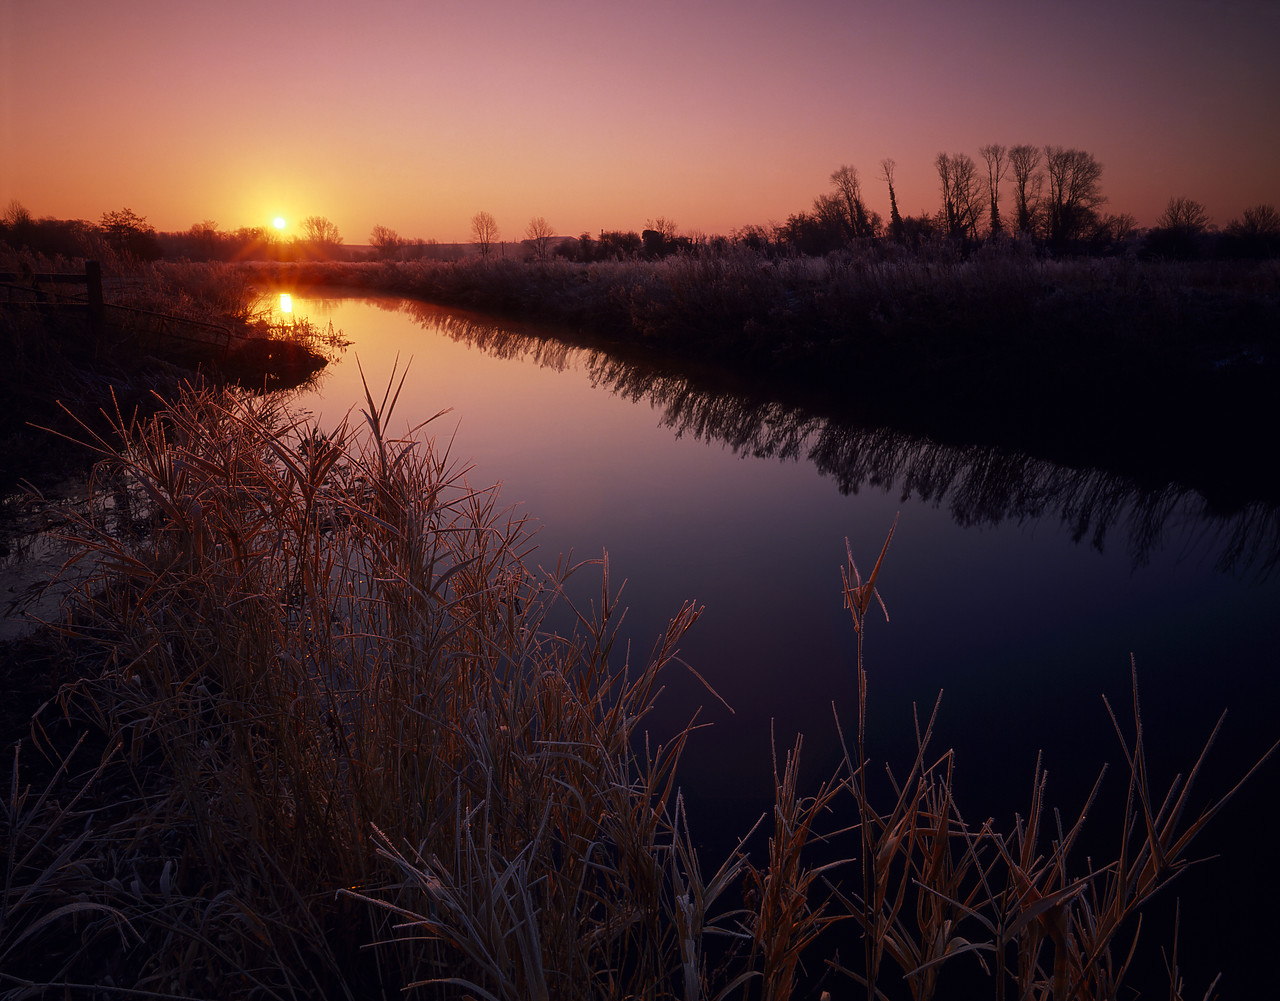 #913222-2 - Sunrise on Frosty River Yare, Norwich, Norfolk, England